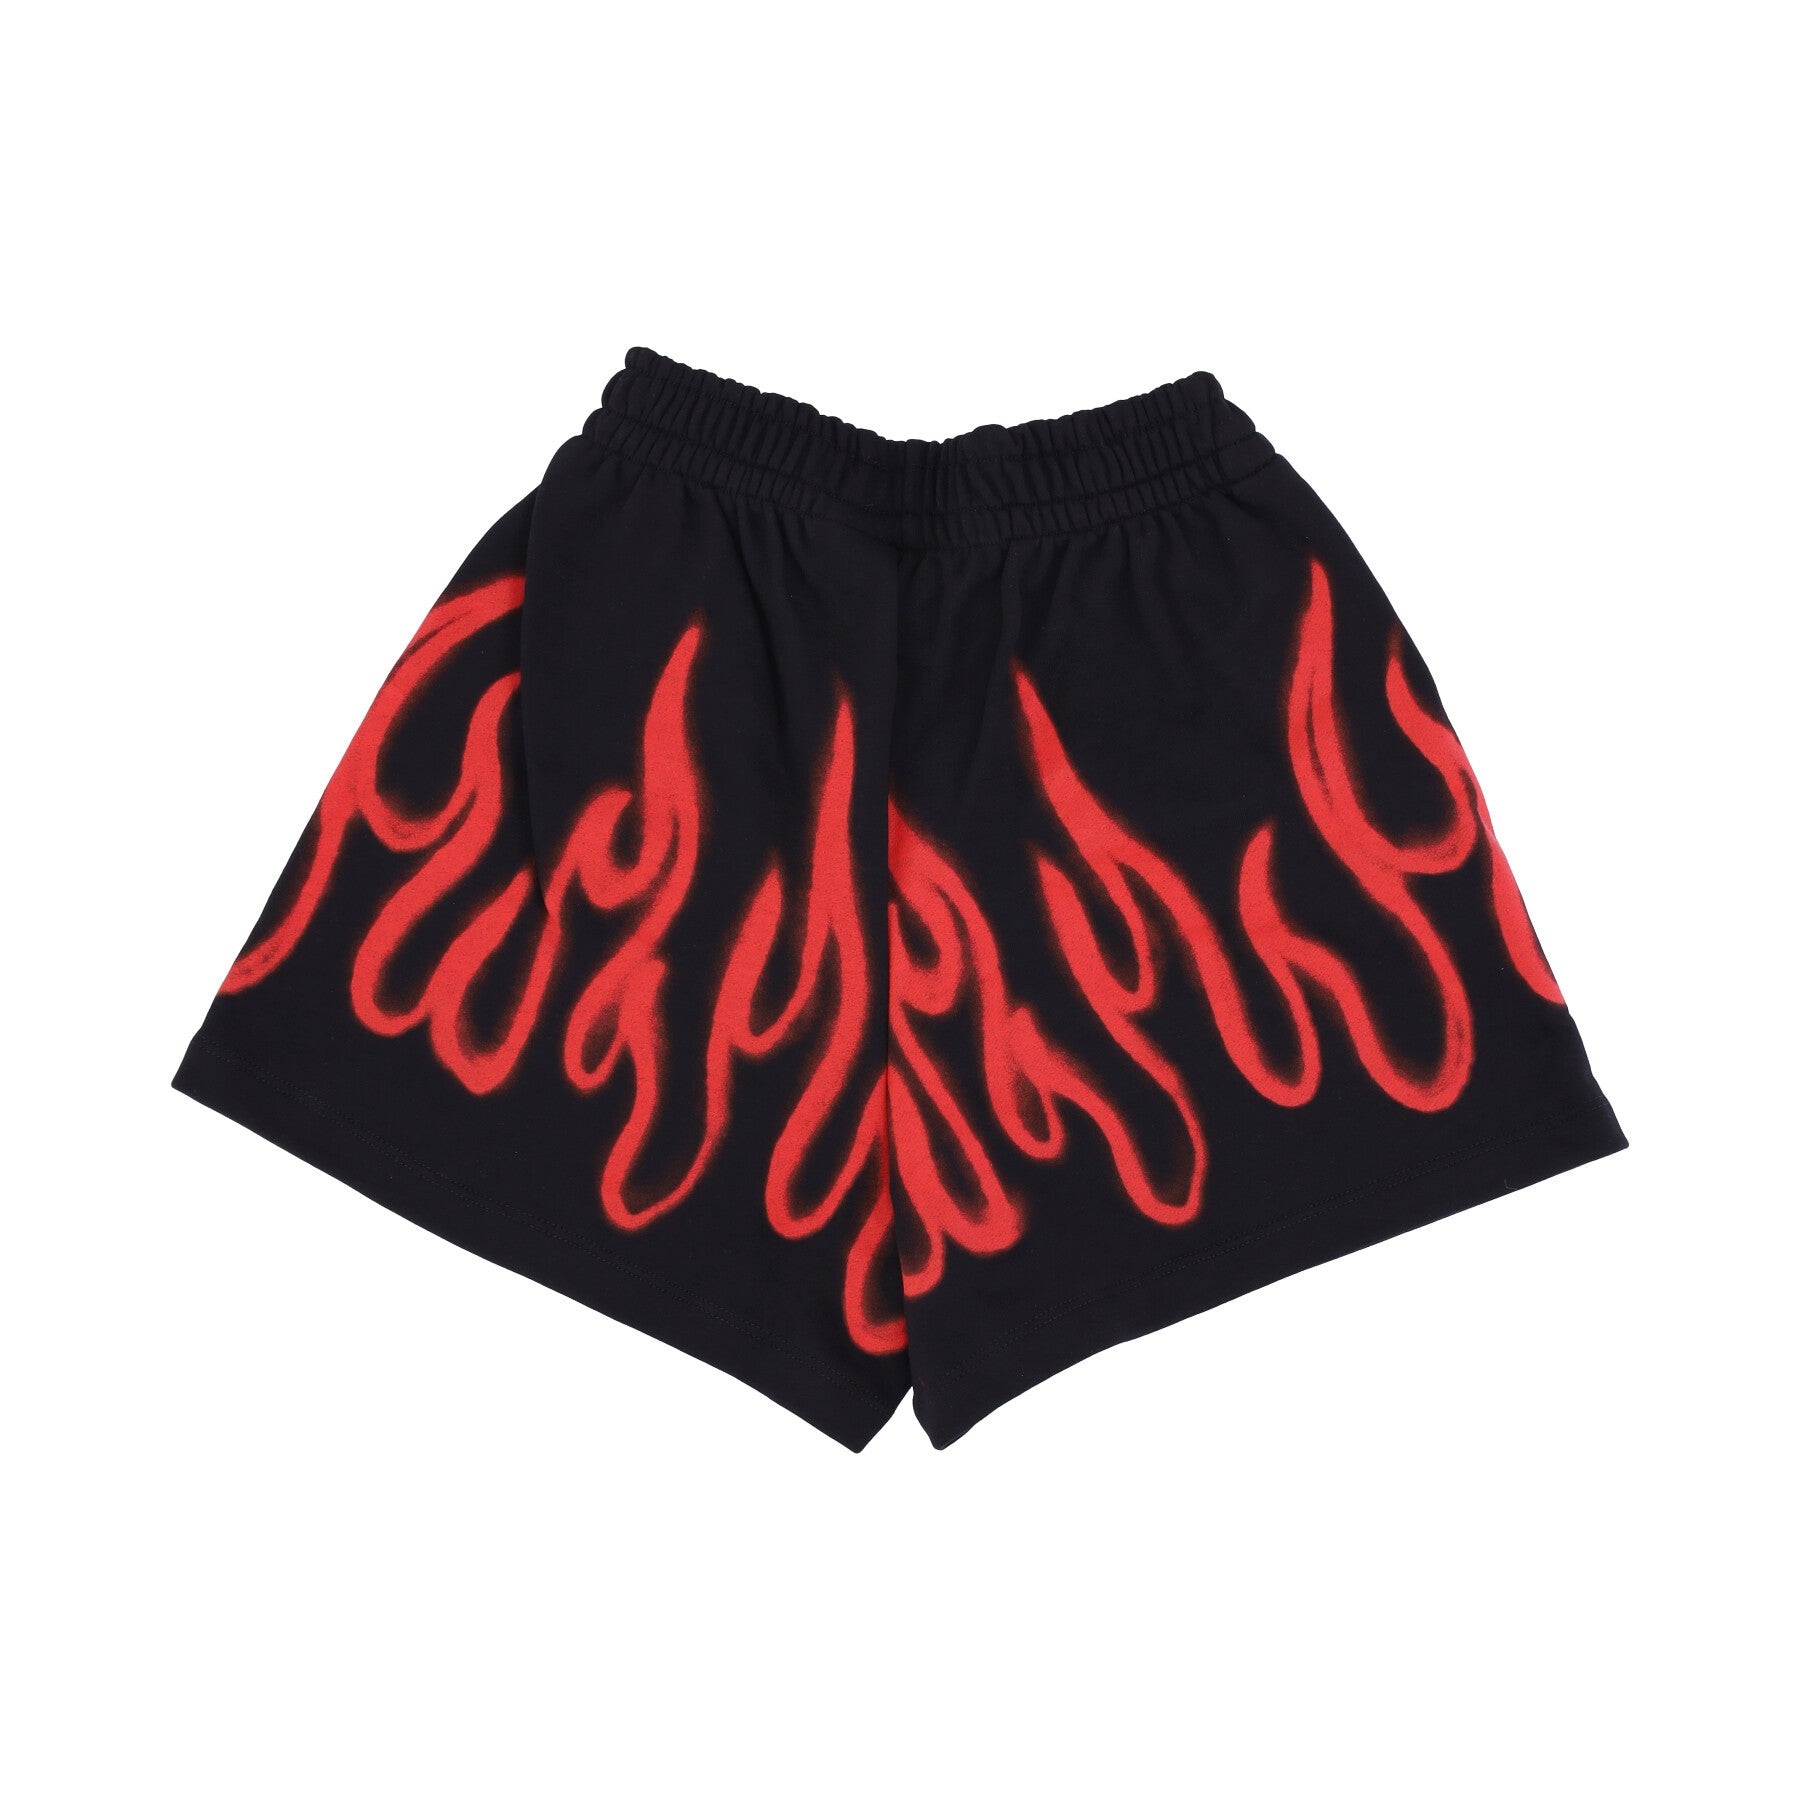 Spray Flames Shorts Women's Shorts Black/red